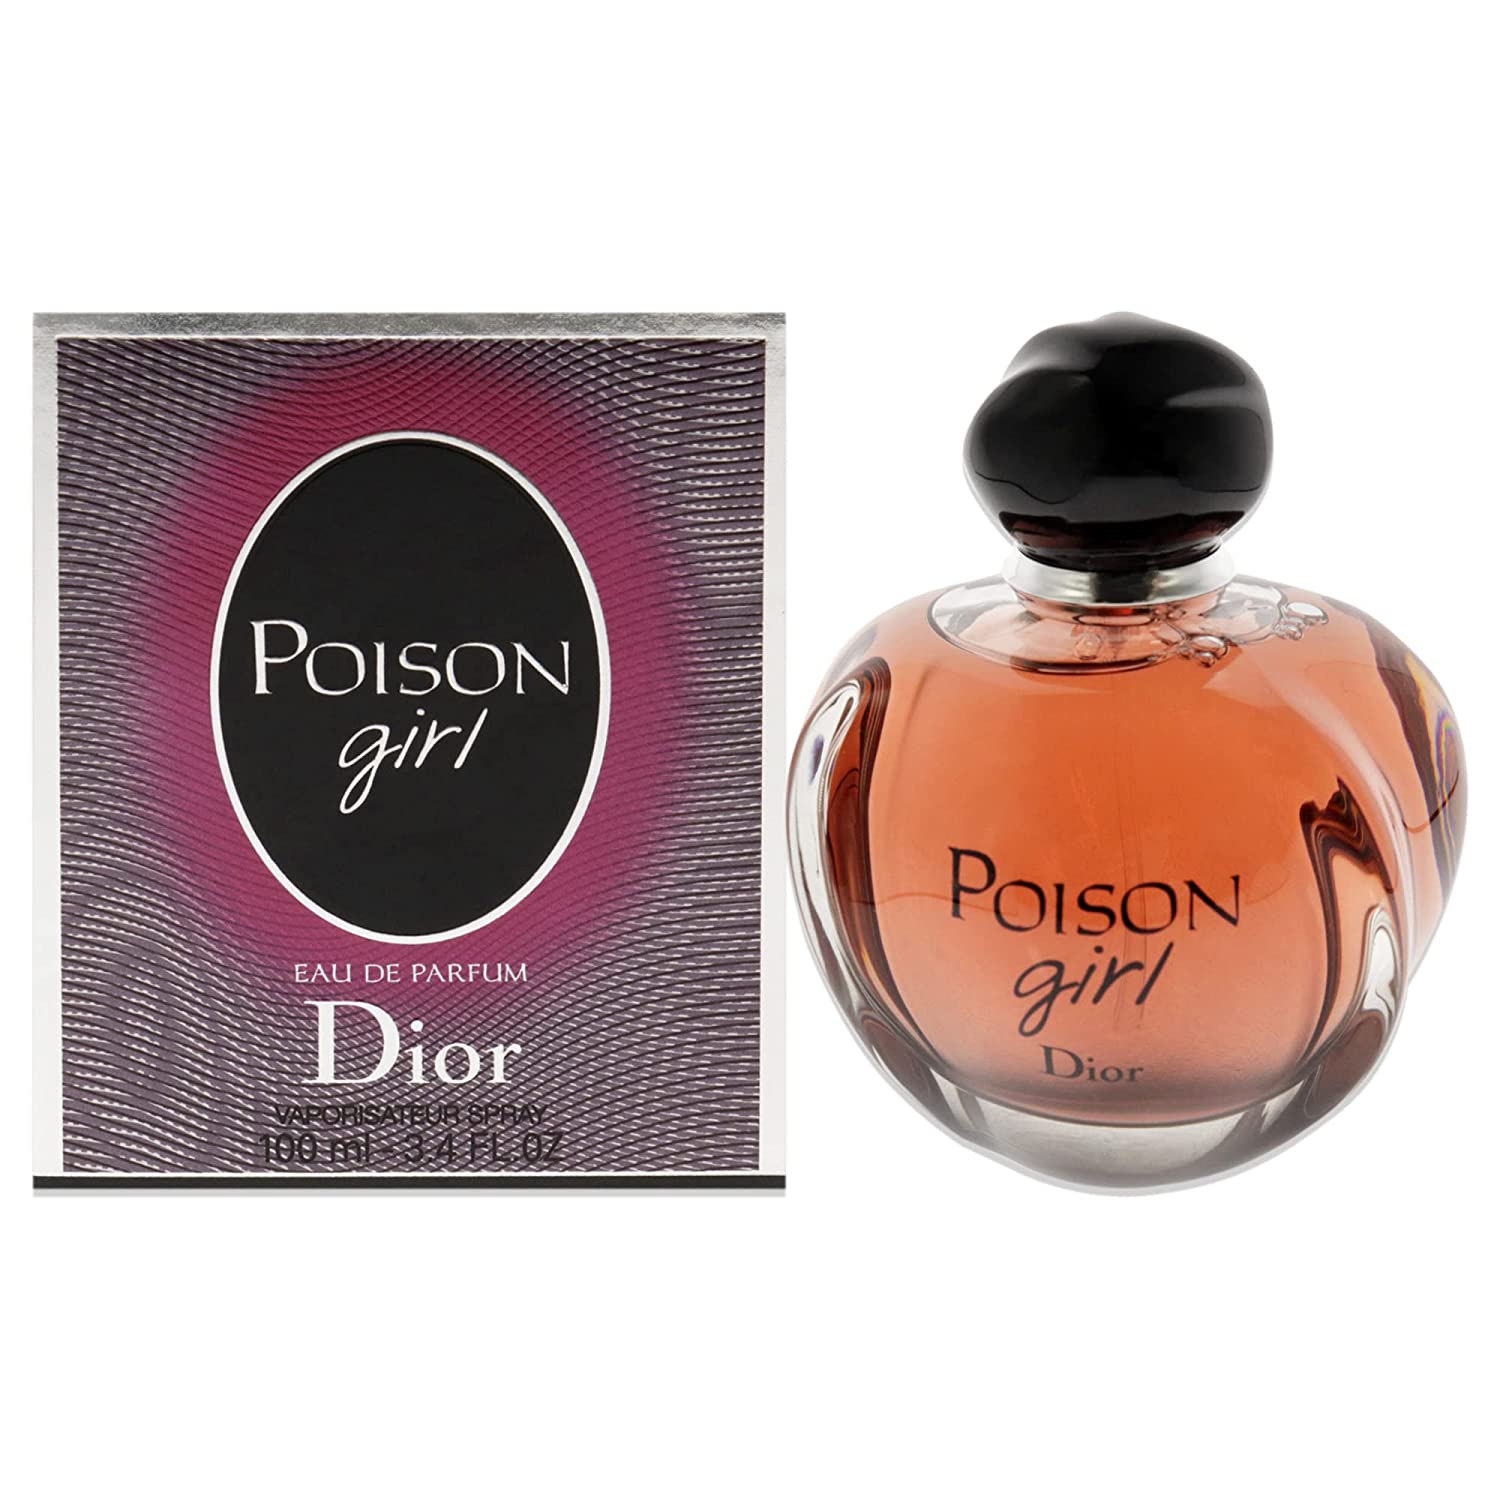 Poison Girl by Christian Dior 3.4 oz EDP Spray W